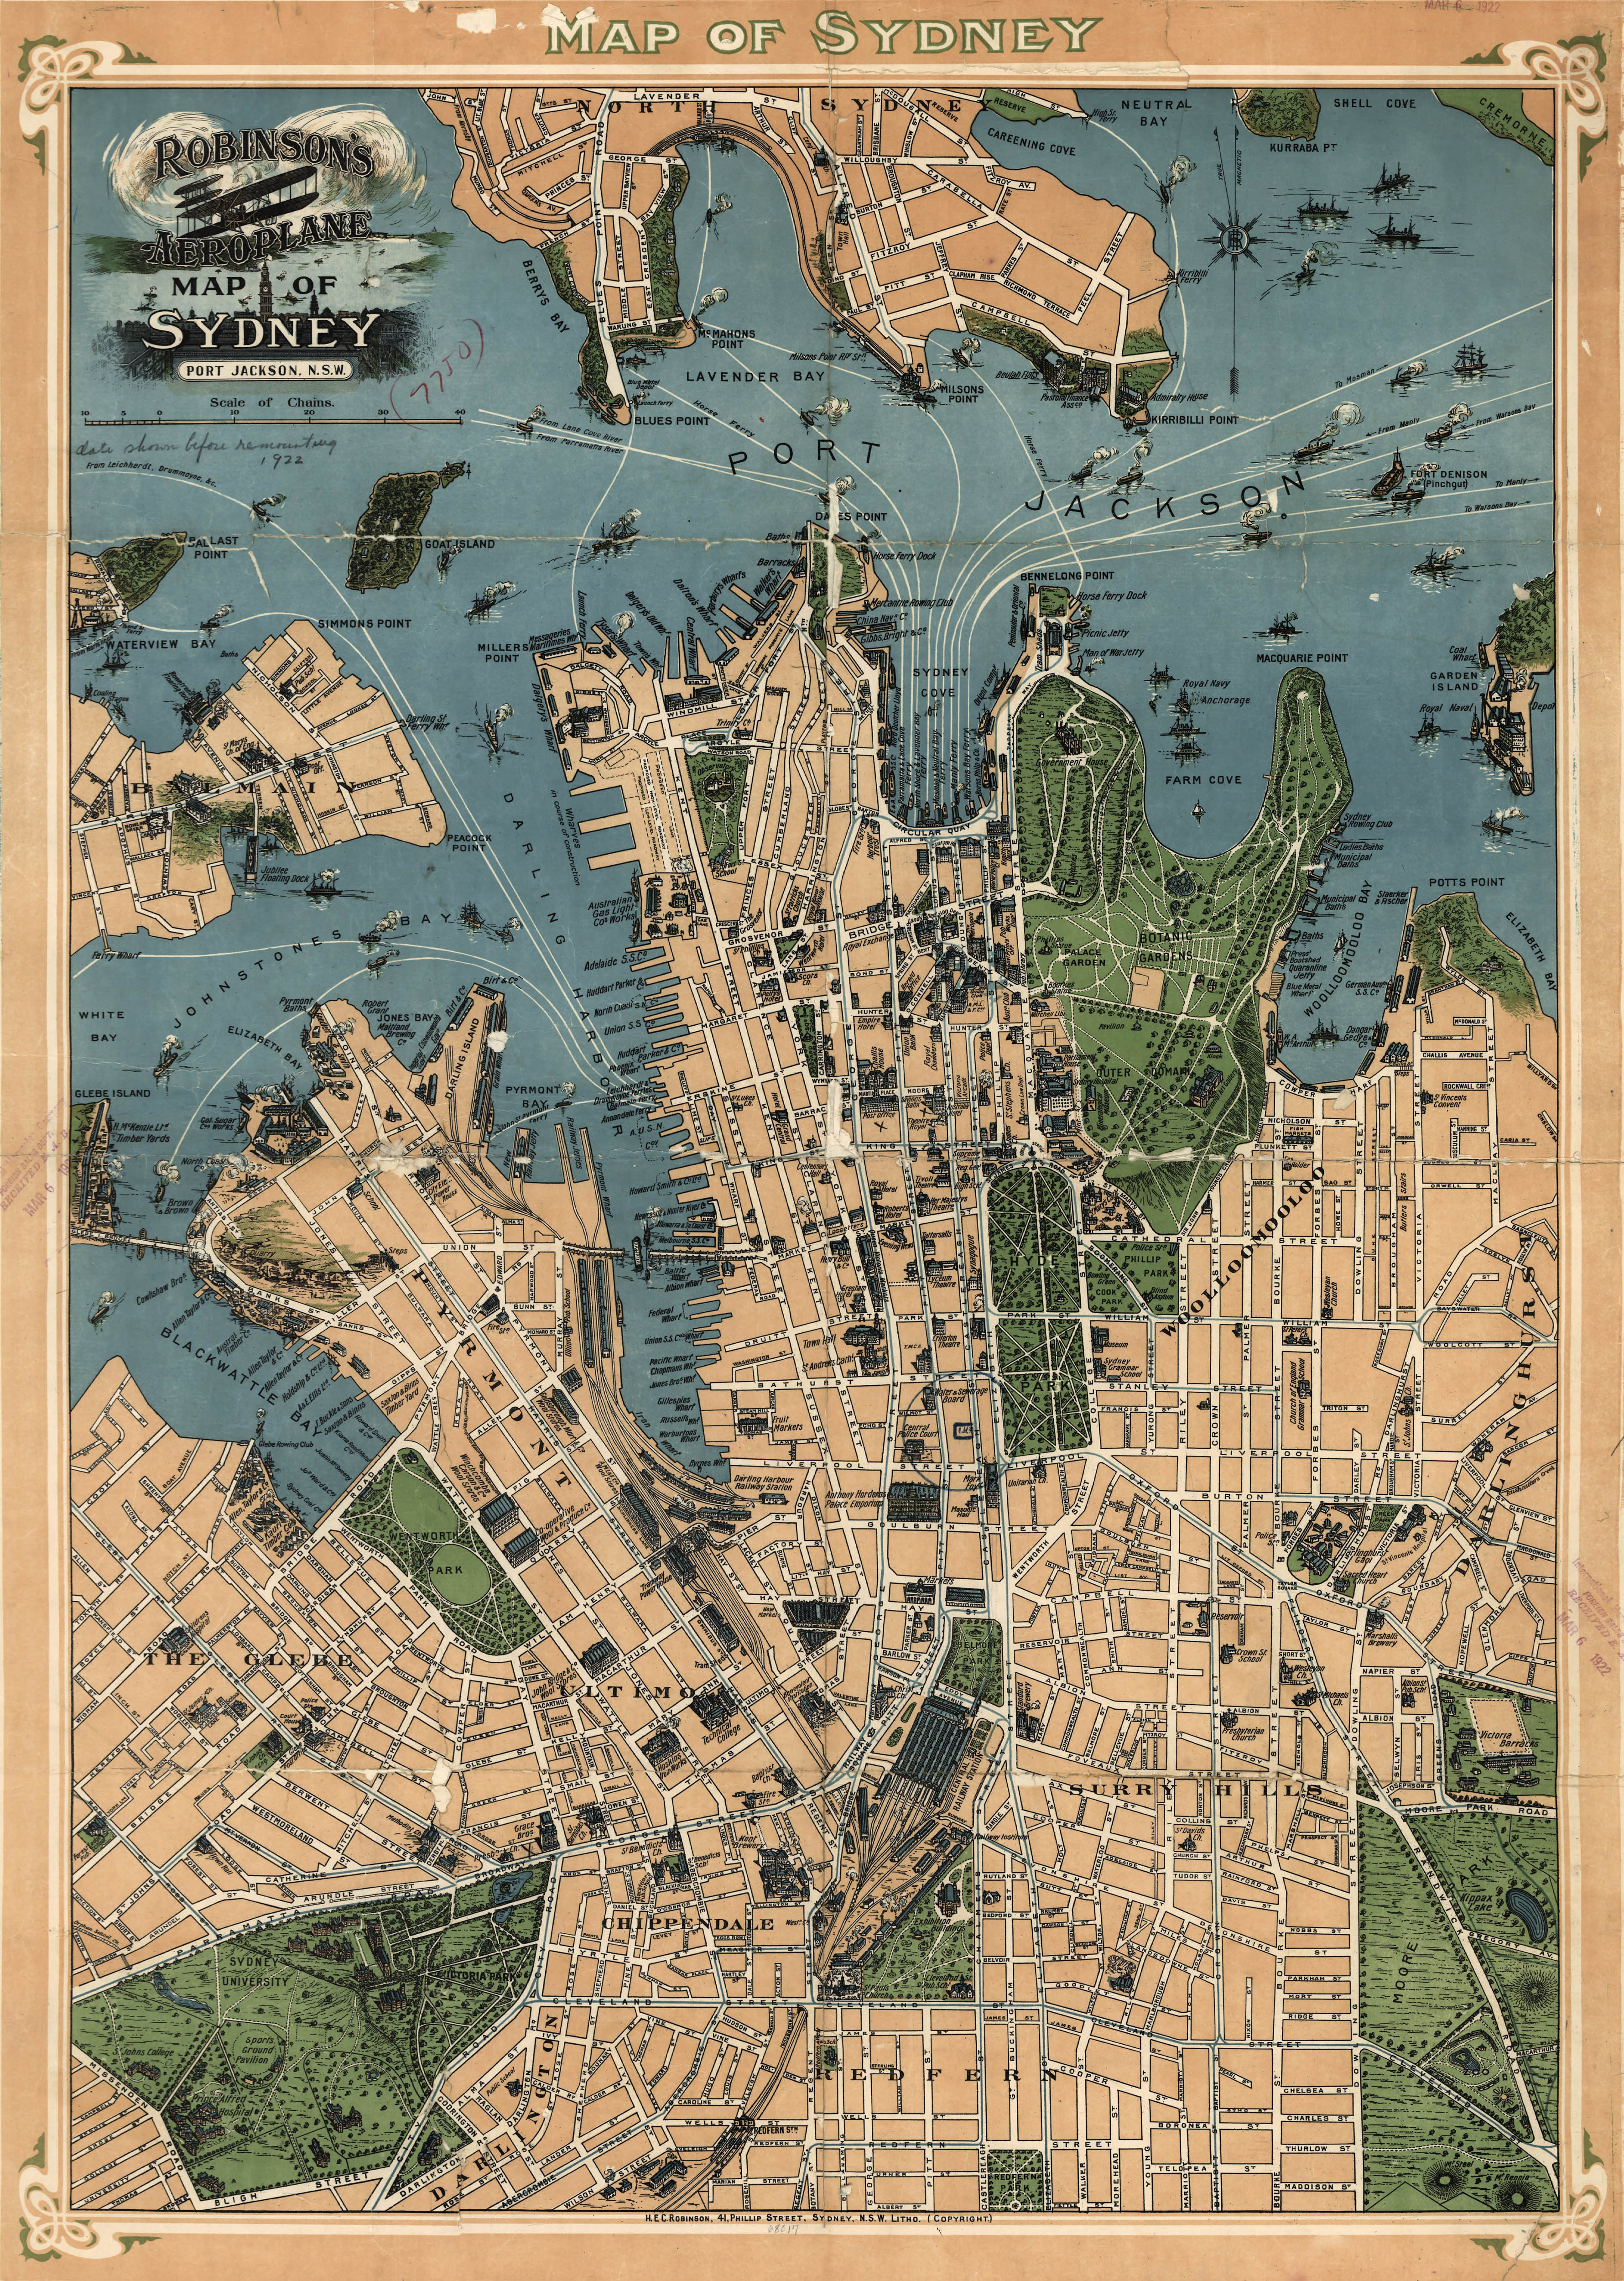 Robinson\u2019s map of Sydney Australia 1922  sydney australia 